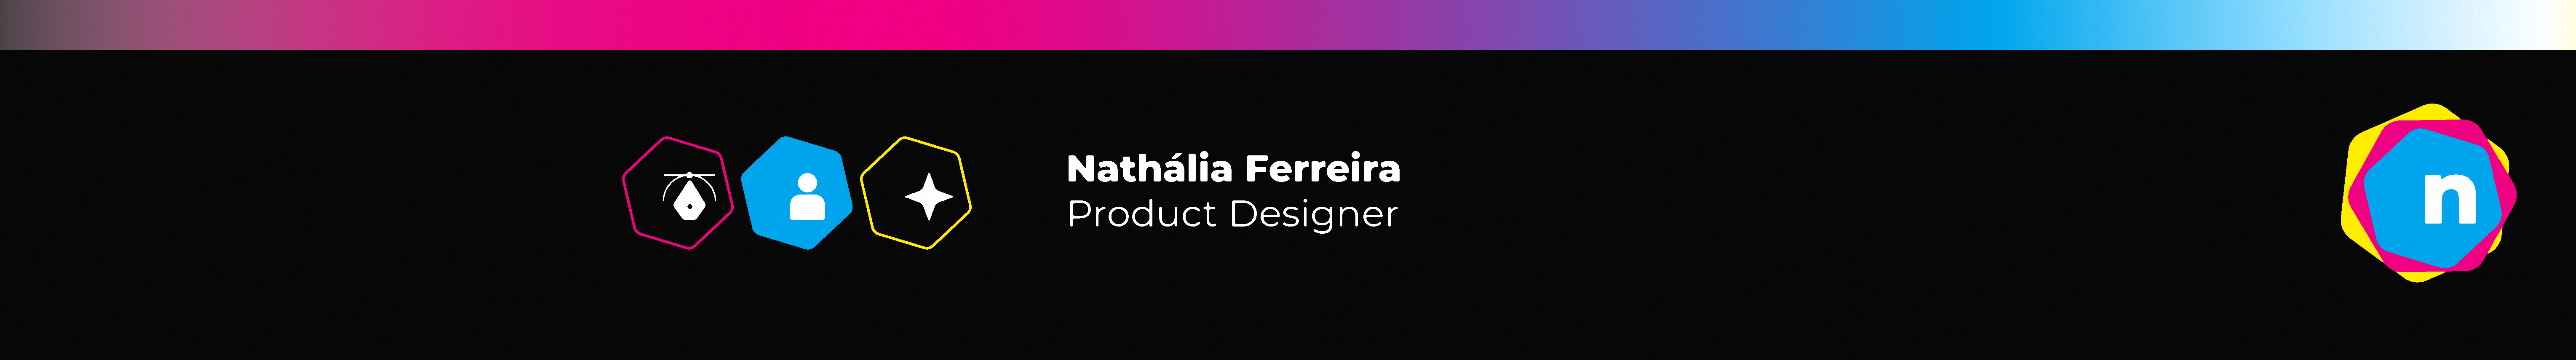 Profielbanner van Nathalia Ferreira